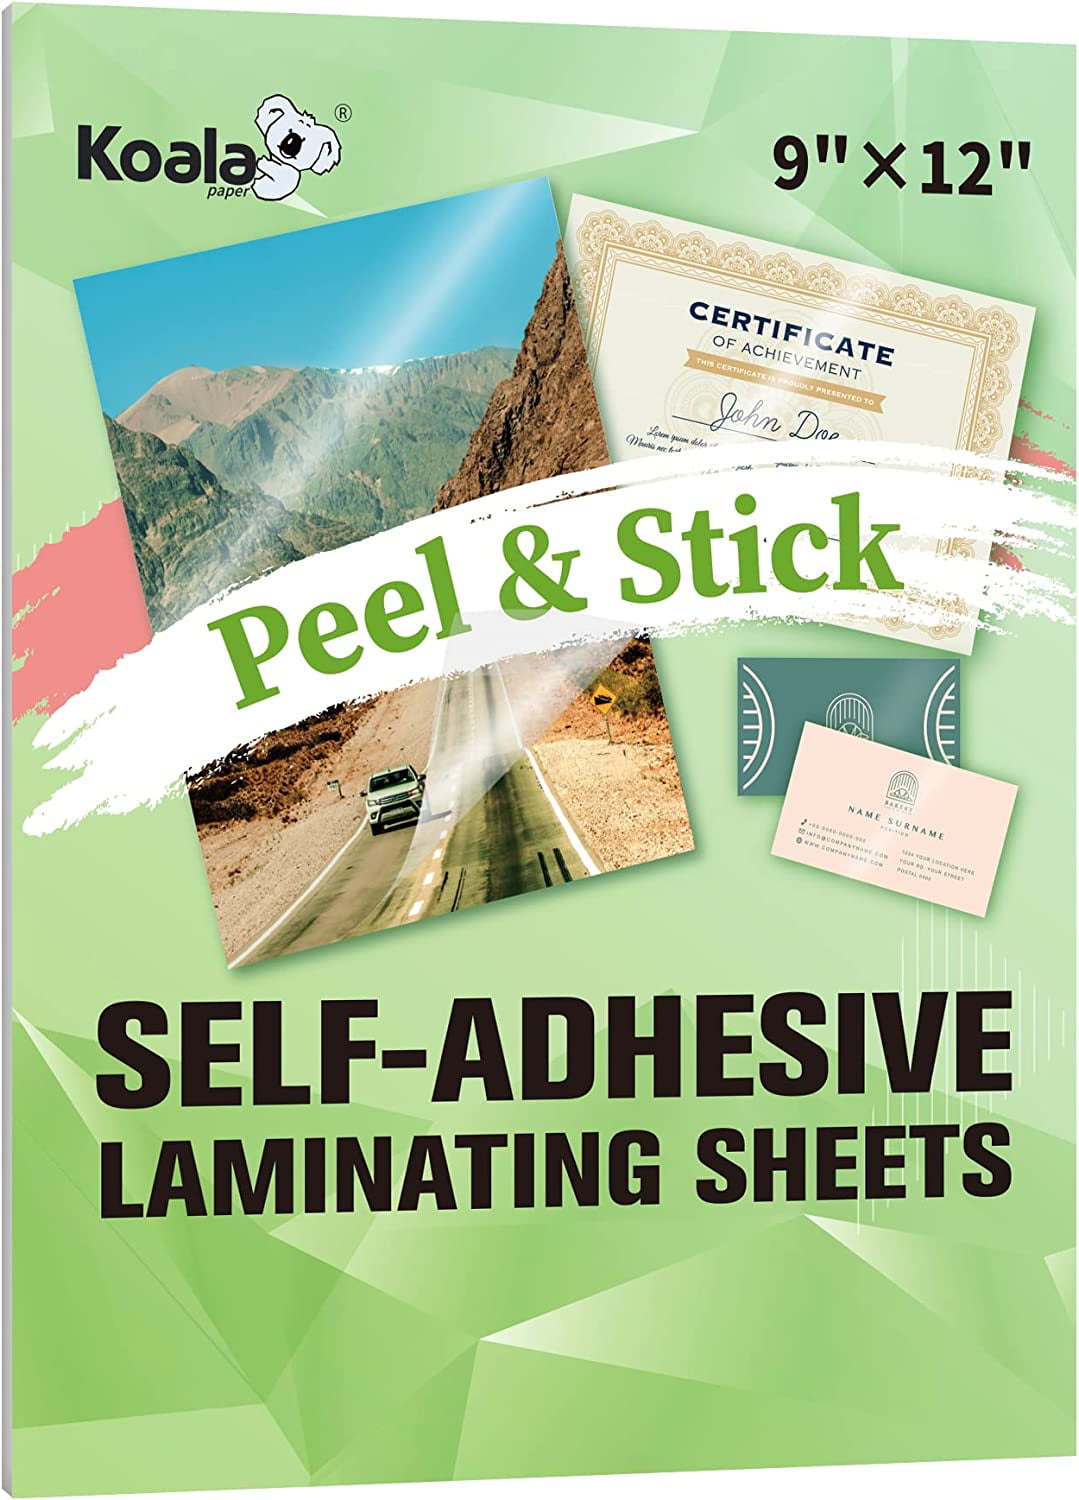 Avery Clear Laminating Sheets, 9 x 12, Permanent Self-Adhesive